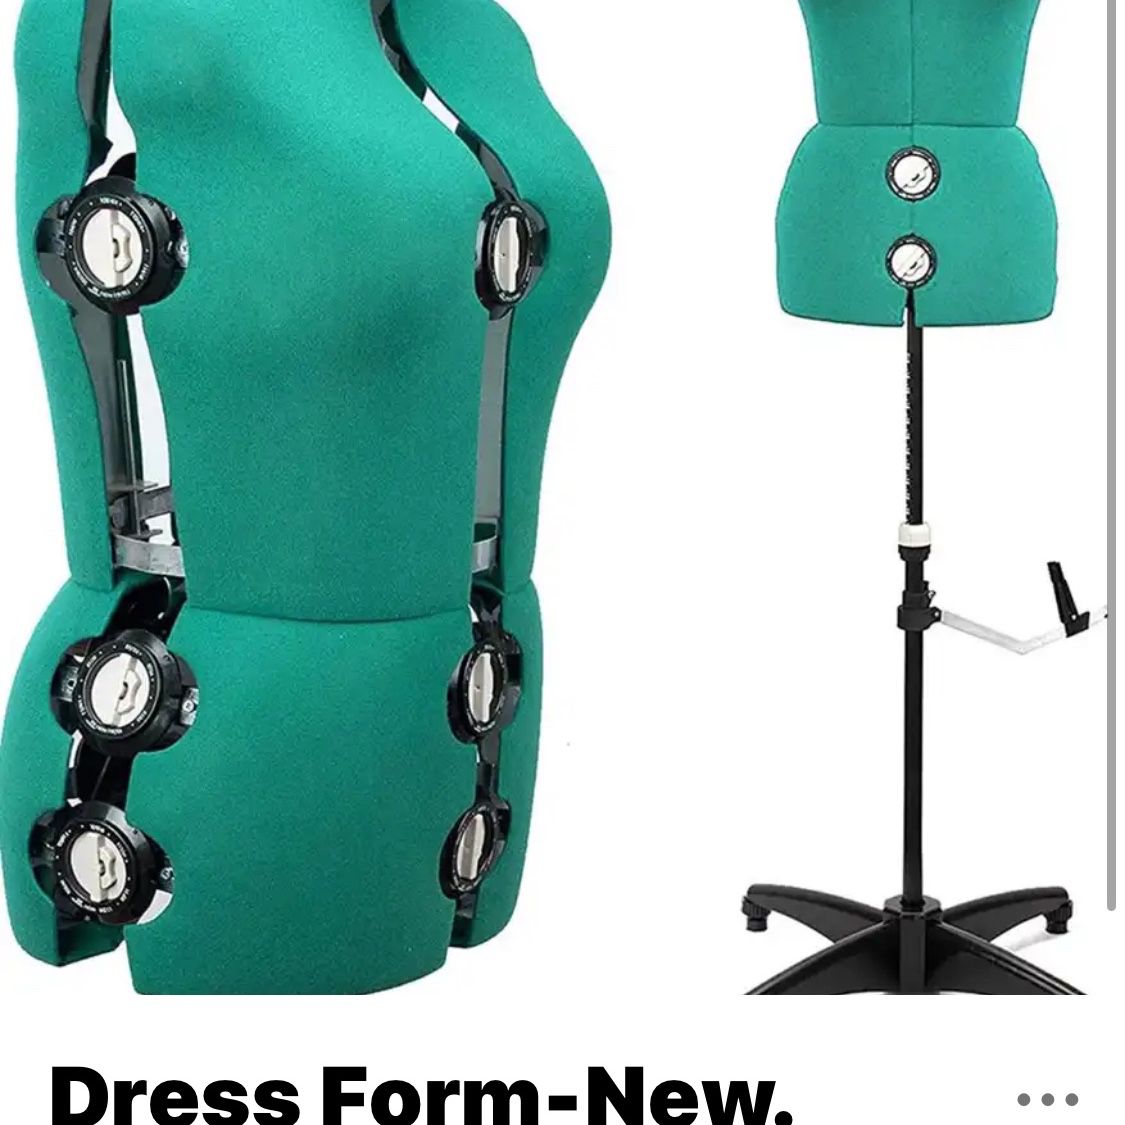 Dress Form- New